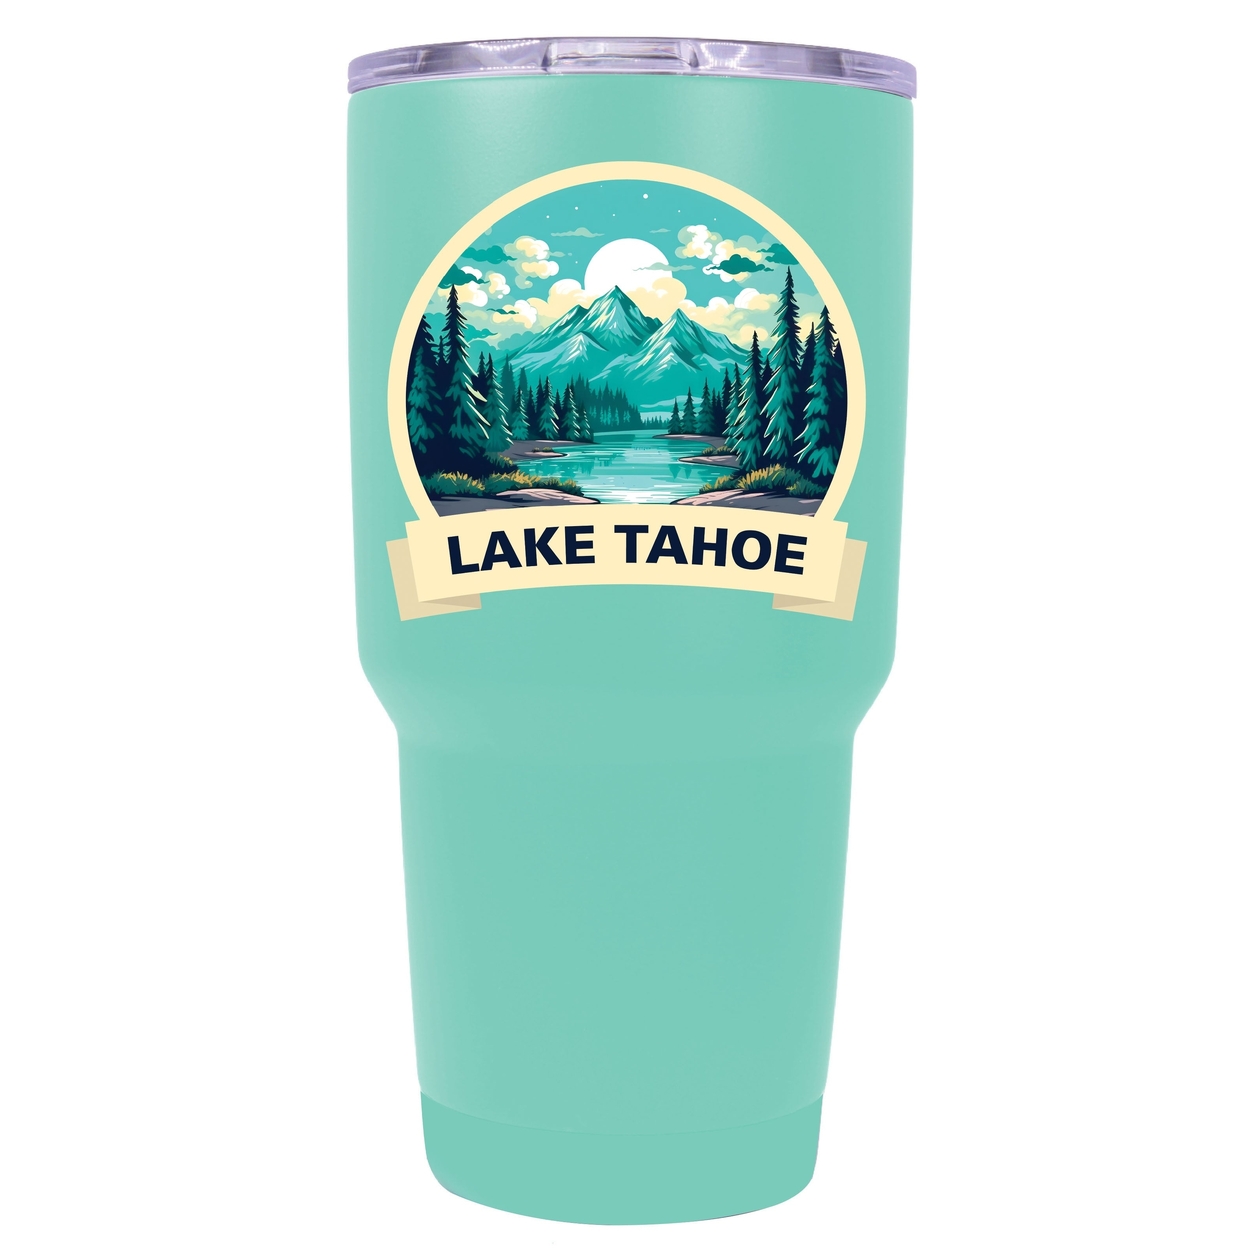 Lake Tahoe California Souvenir 24 Oz Insulated Stainless Steel Tumbler - Green,,4-Pack